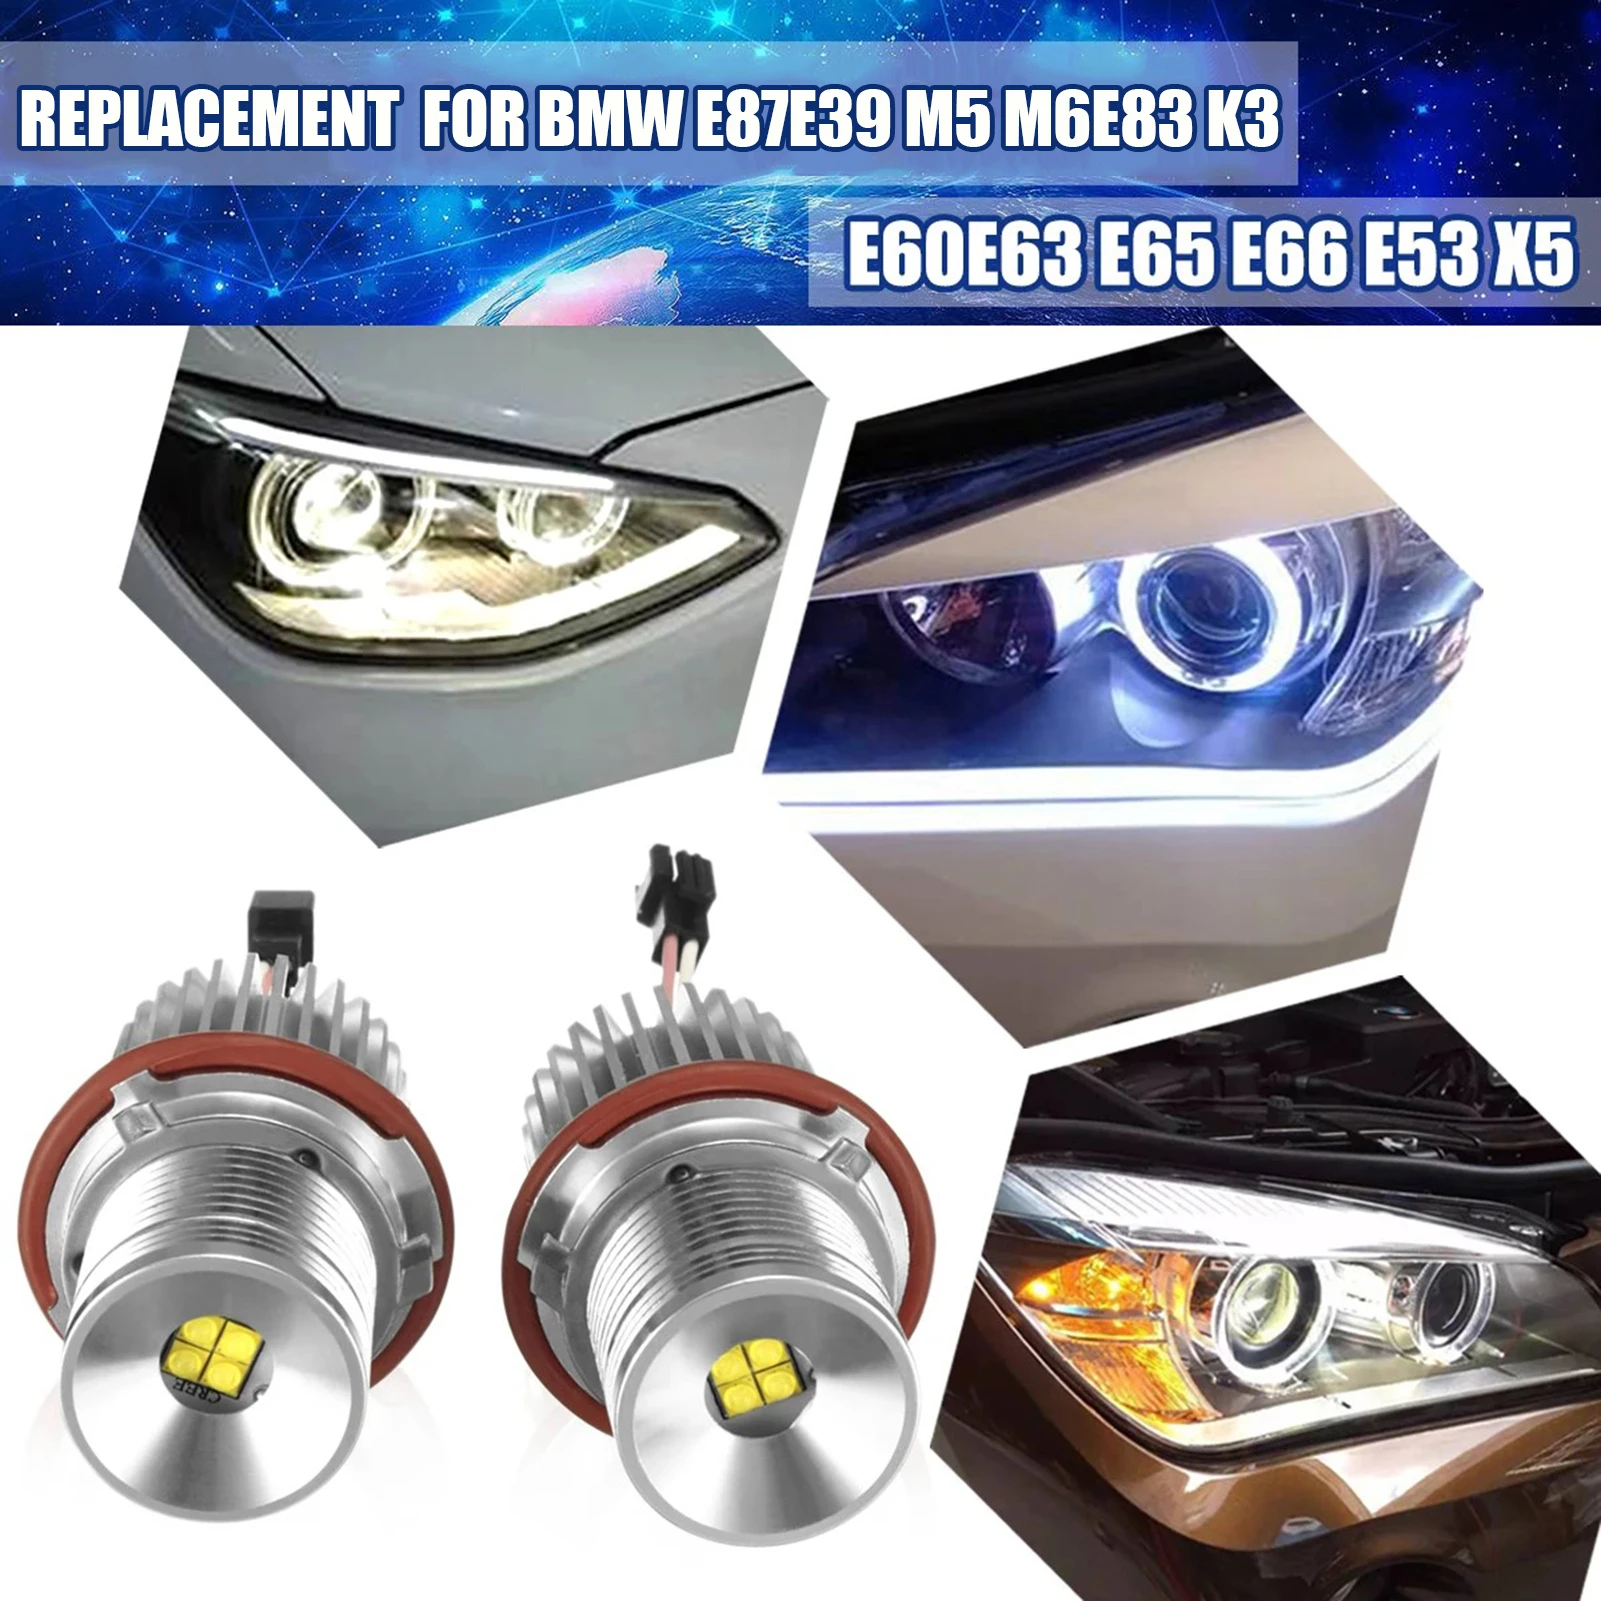 Angel Eyes Halo 6K White 20W LED Ring Marker Light Bulbs FIT BMW E39 E60 E63 E65 